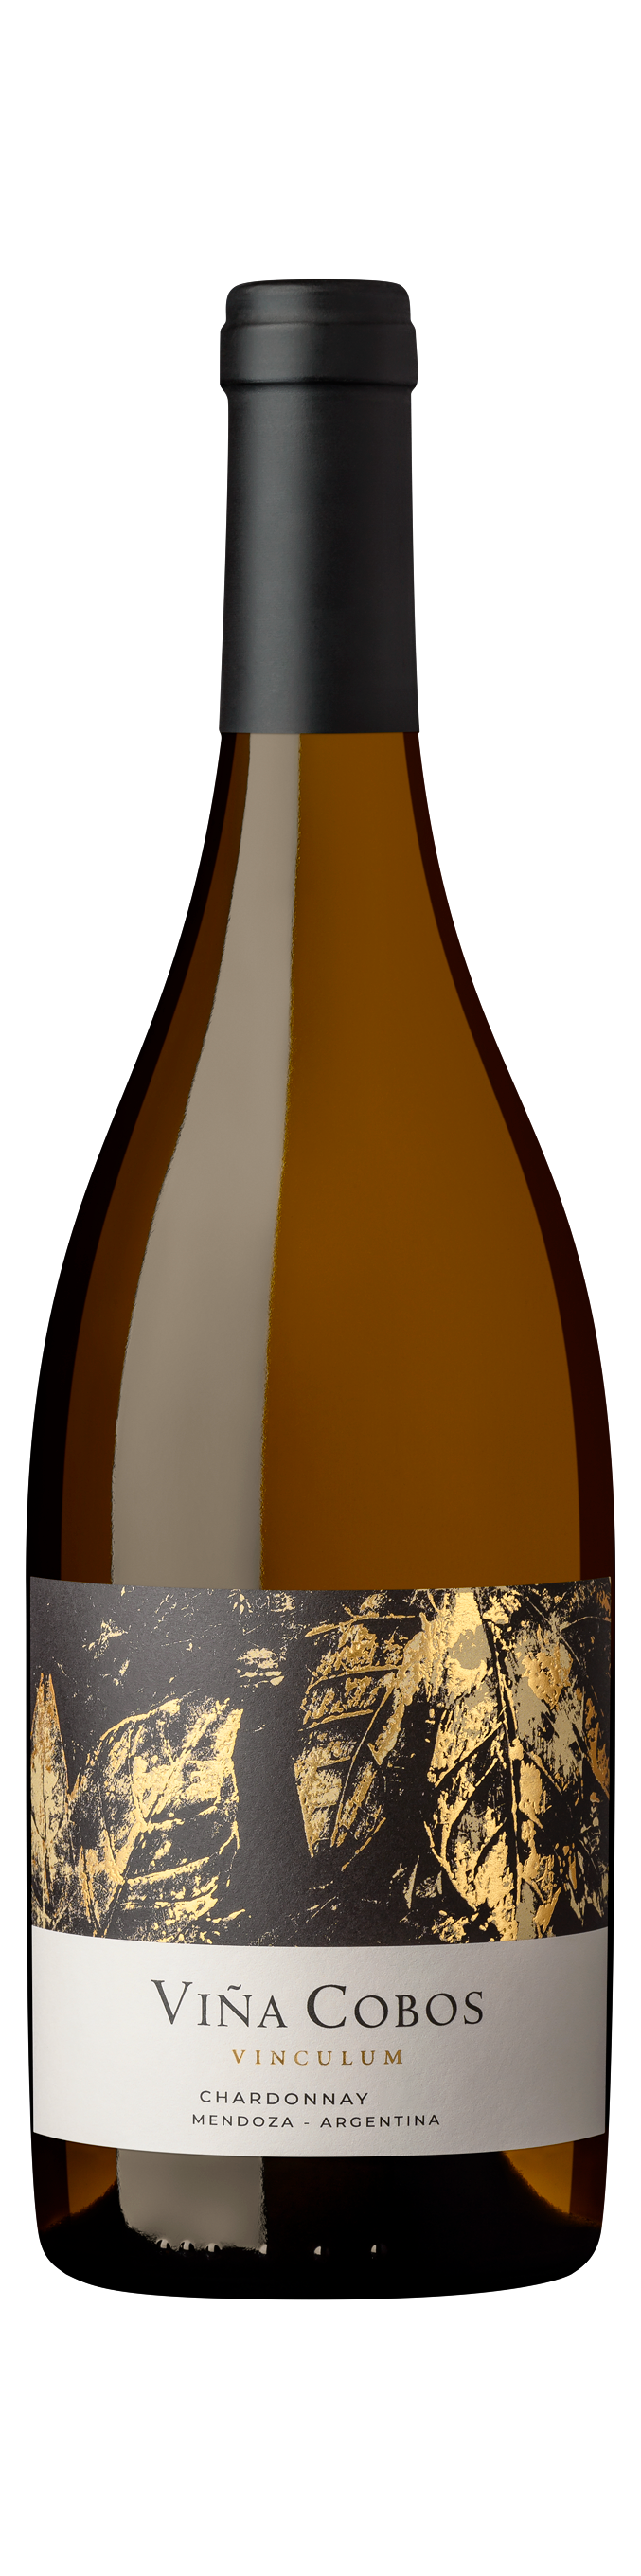 Bottle shot - Viña Cobos, Vinculum Chardonnay, Mendoza, Argentina